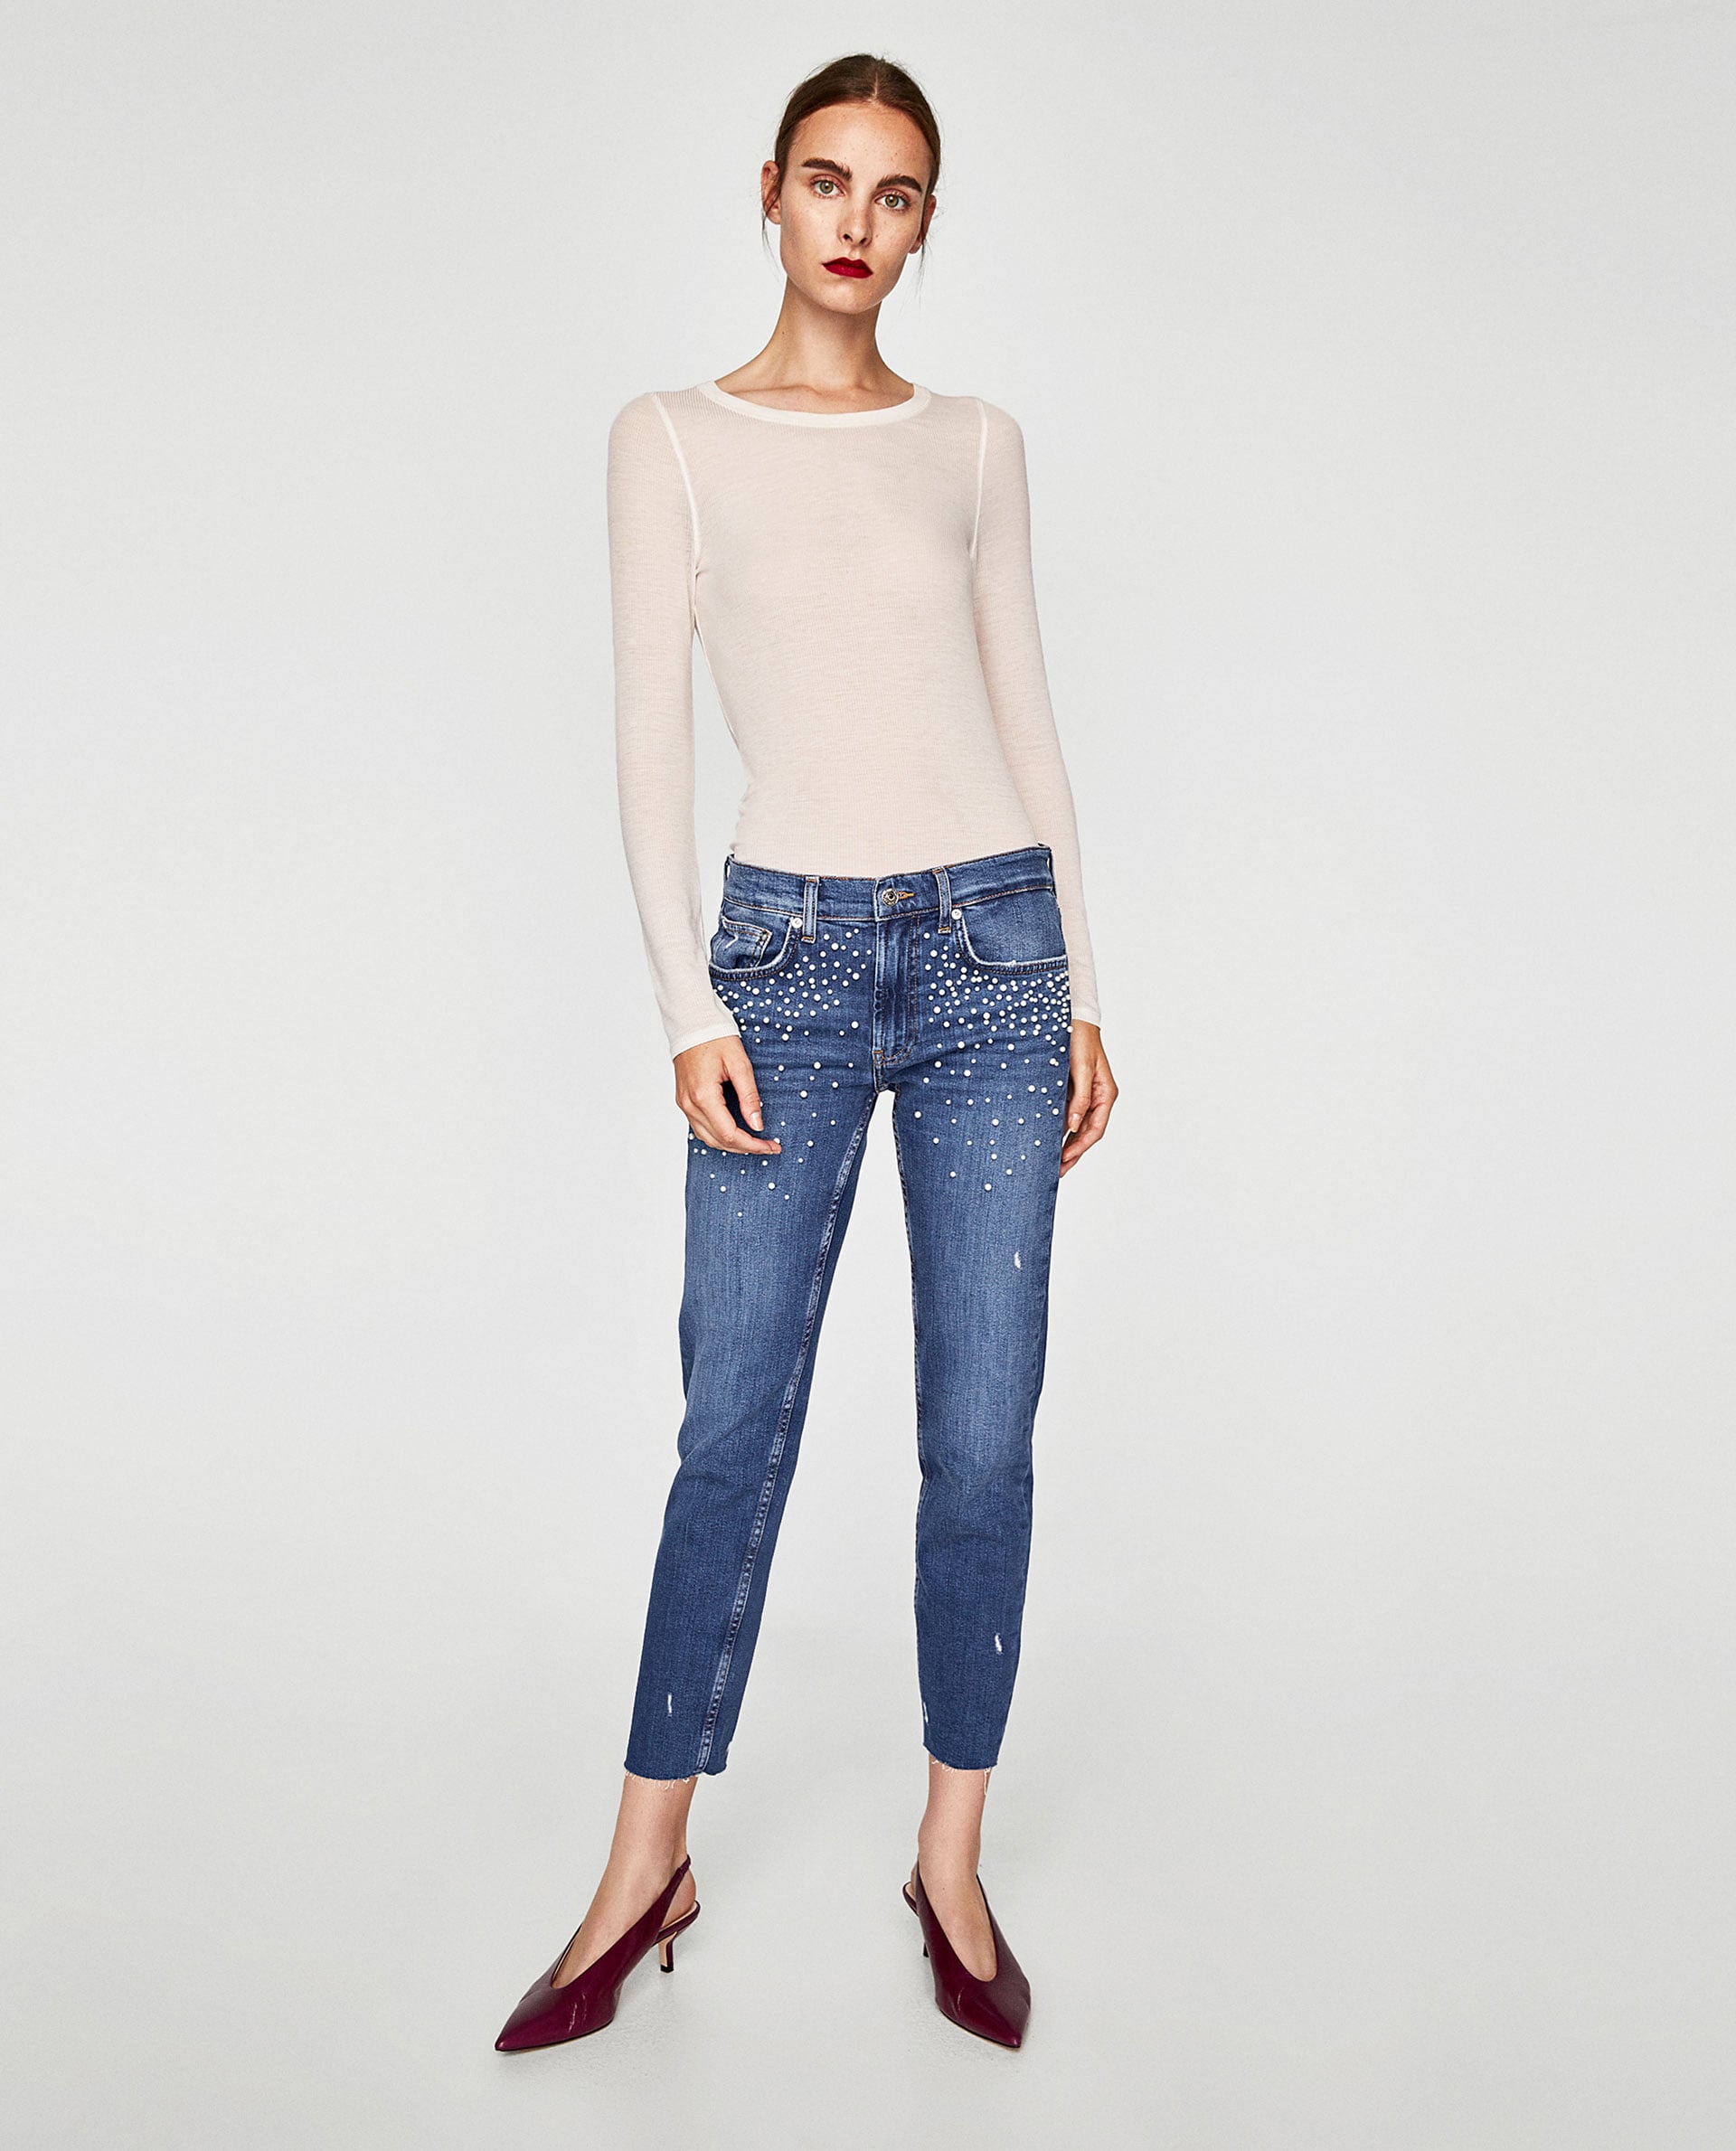 Zara Pearl Boyfriend Jeans | Ultimate Guide to Fall's Biggest Denim Trends | POPSUGAR Fashion Photo 13